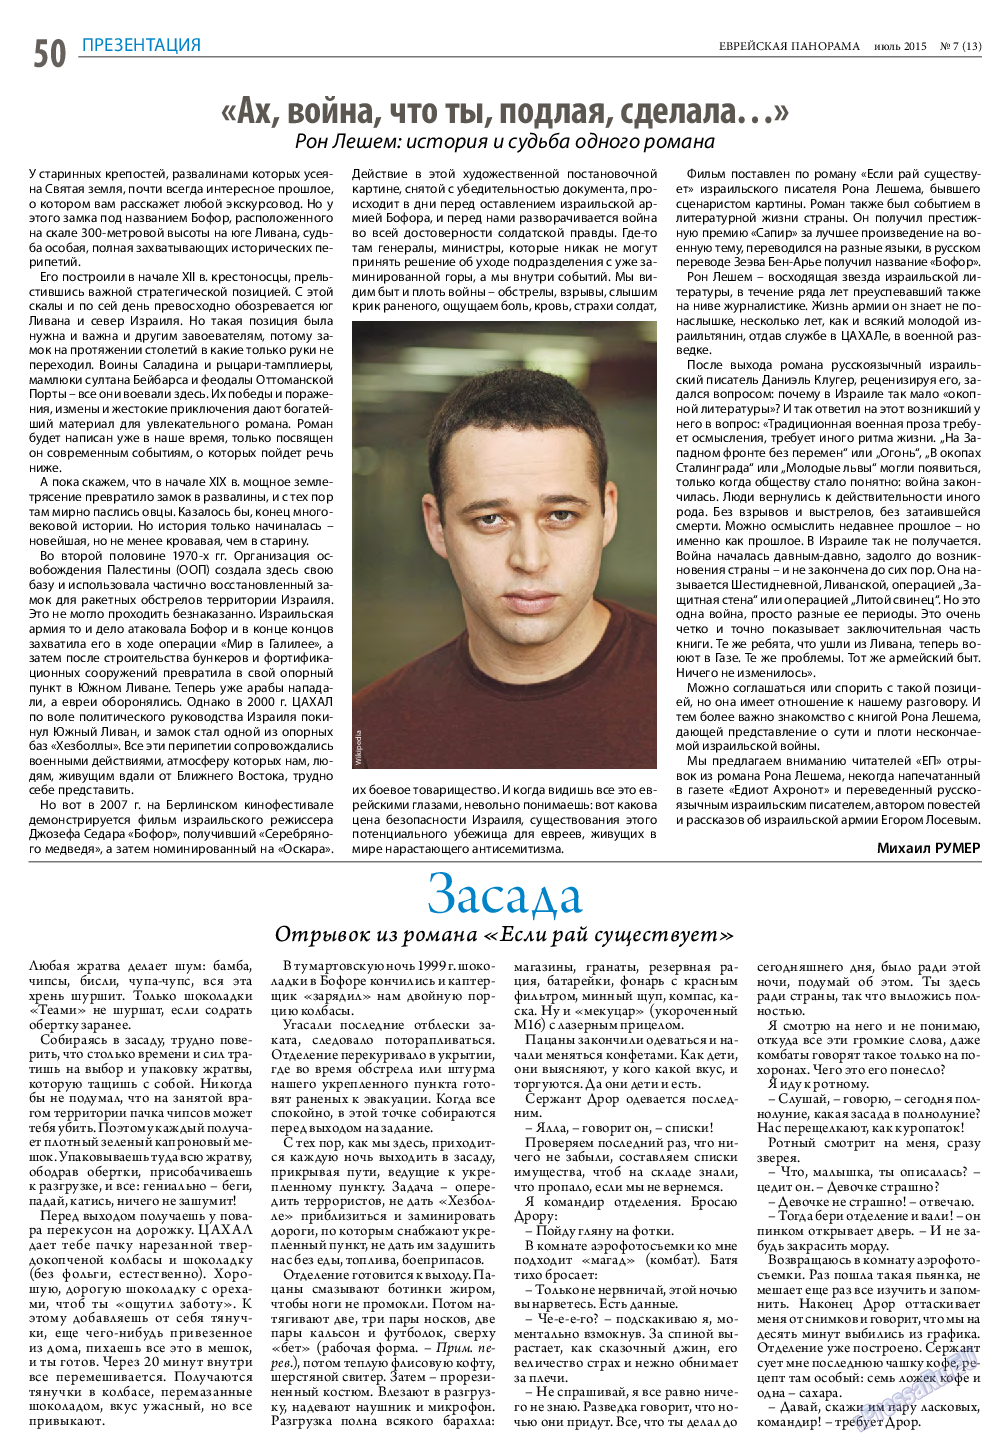 Еврейская панорама, газета. 2015 №7 стр.50